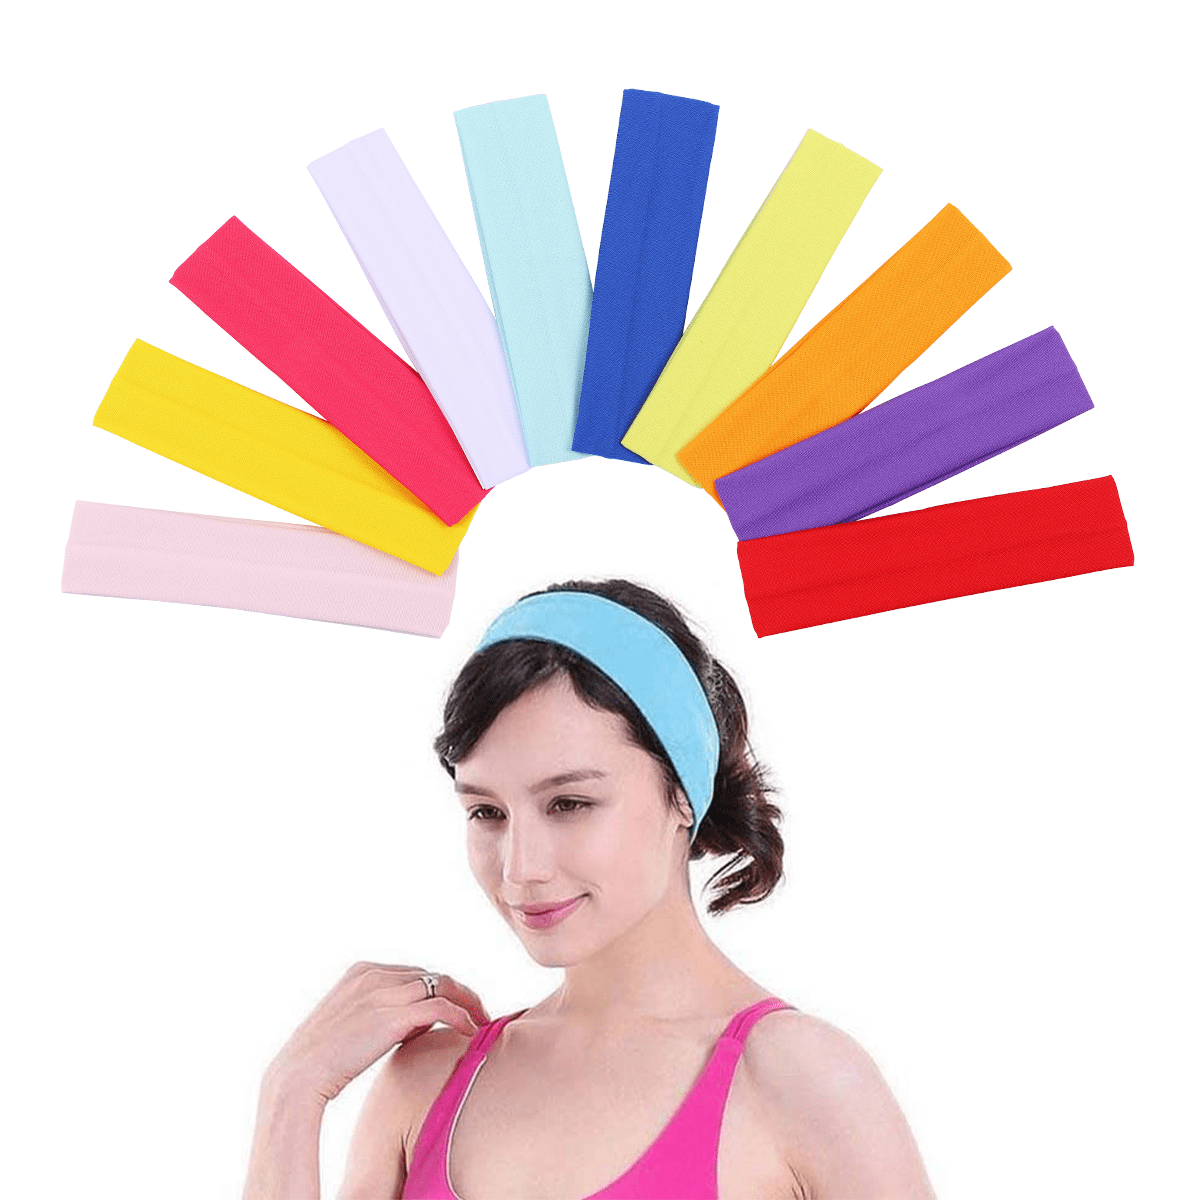 Elastic Stretch Sport Hairbands,10 Pcs Yoga Cotton Headbands, Yoga Beauty Hair  Style Headbands for Women Girls Sports,Pilates,Fitness (Mixed Colors) -  